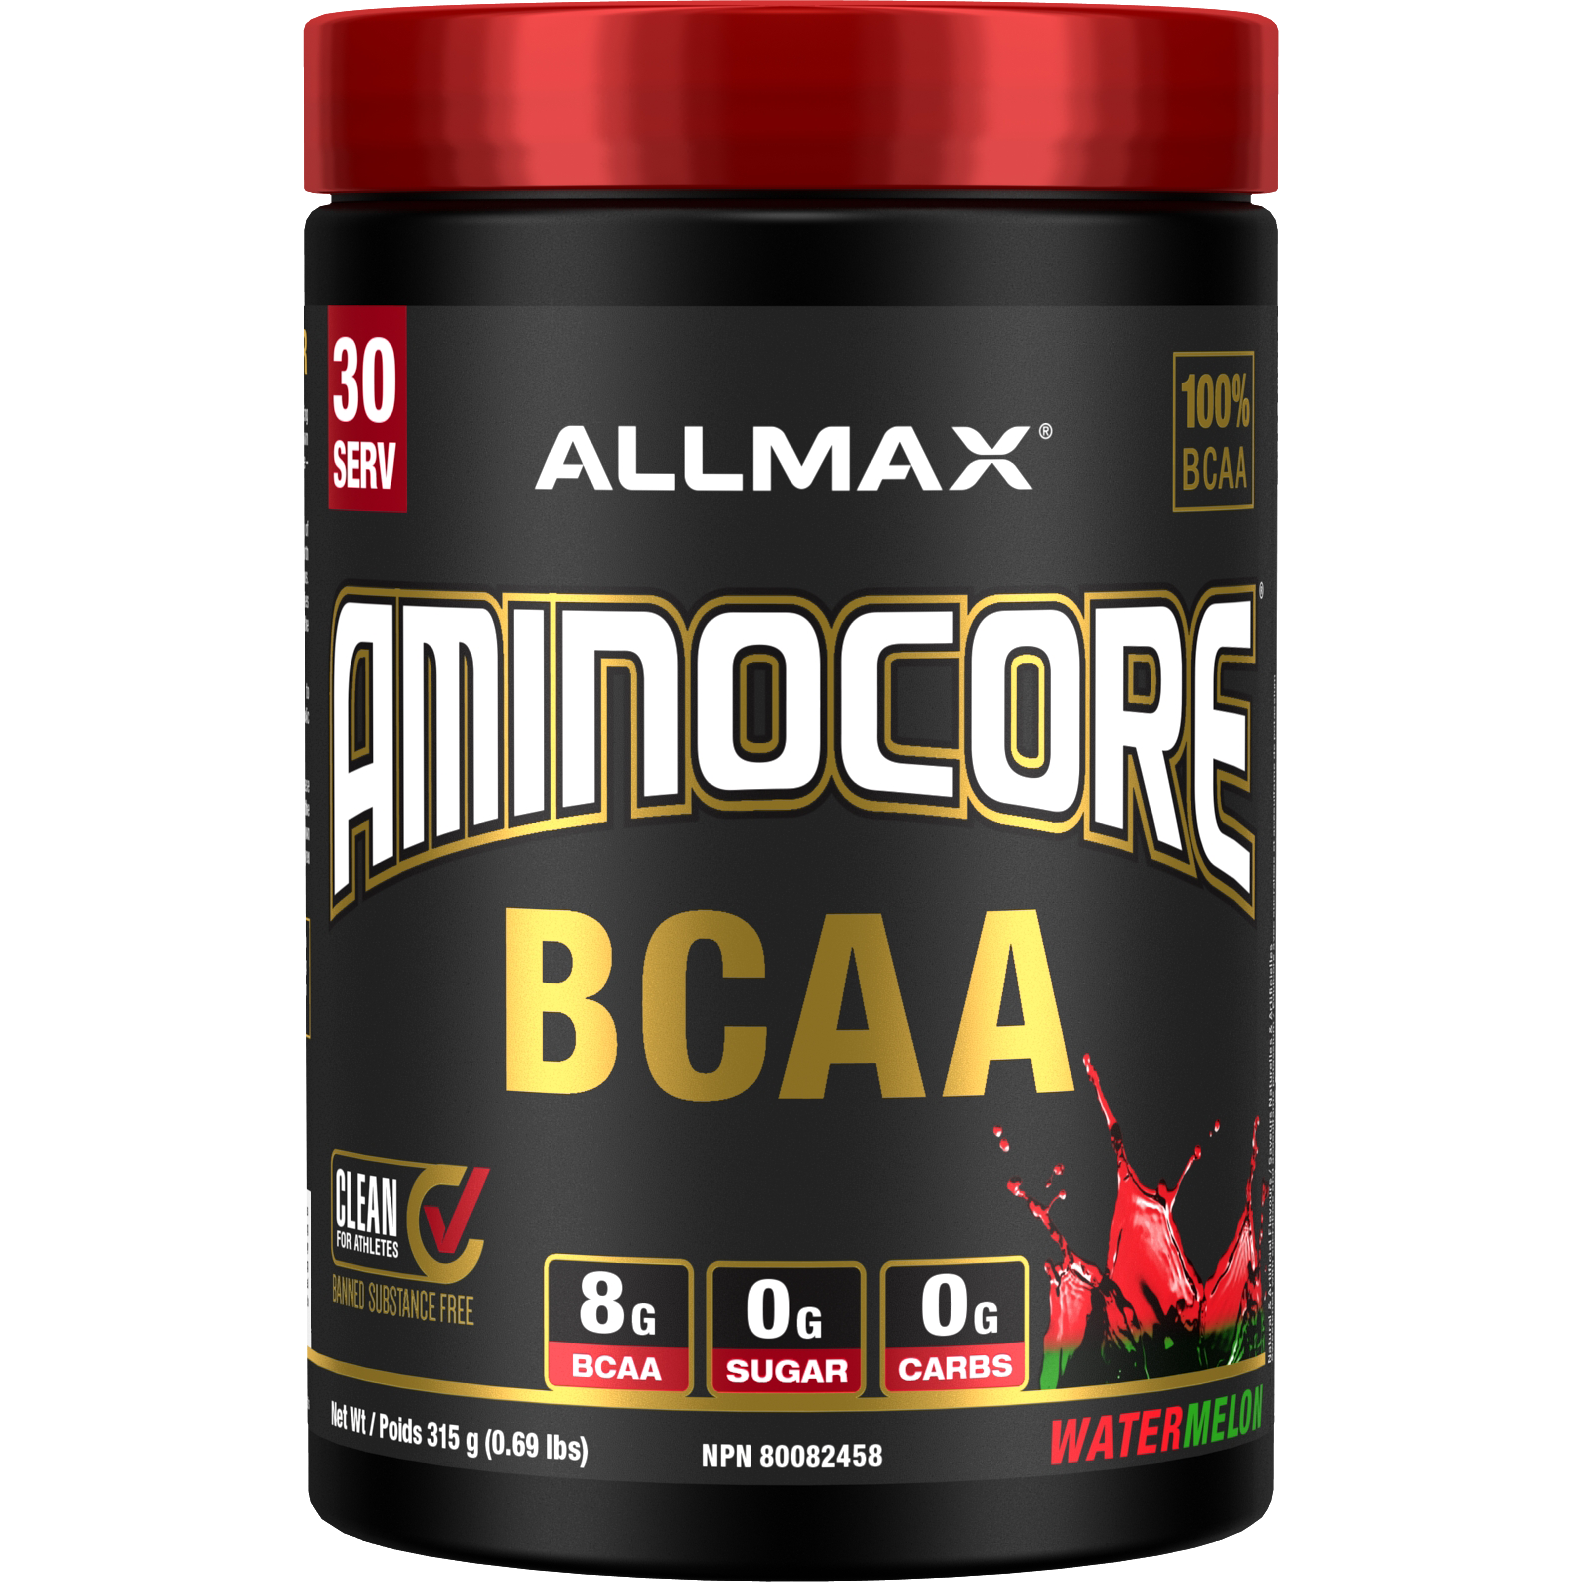 NEW Allmax Aminocore (30 servings) BCAAs and Amino Acids Watermelon Allmax Nutrition